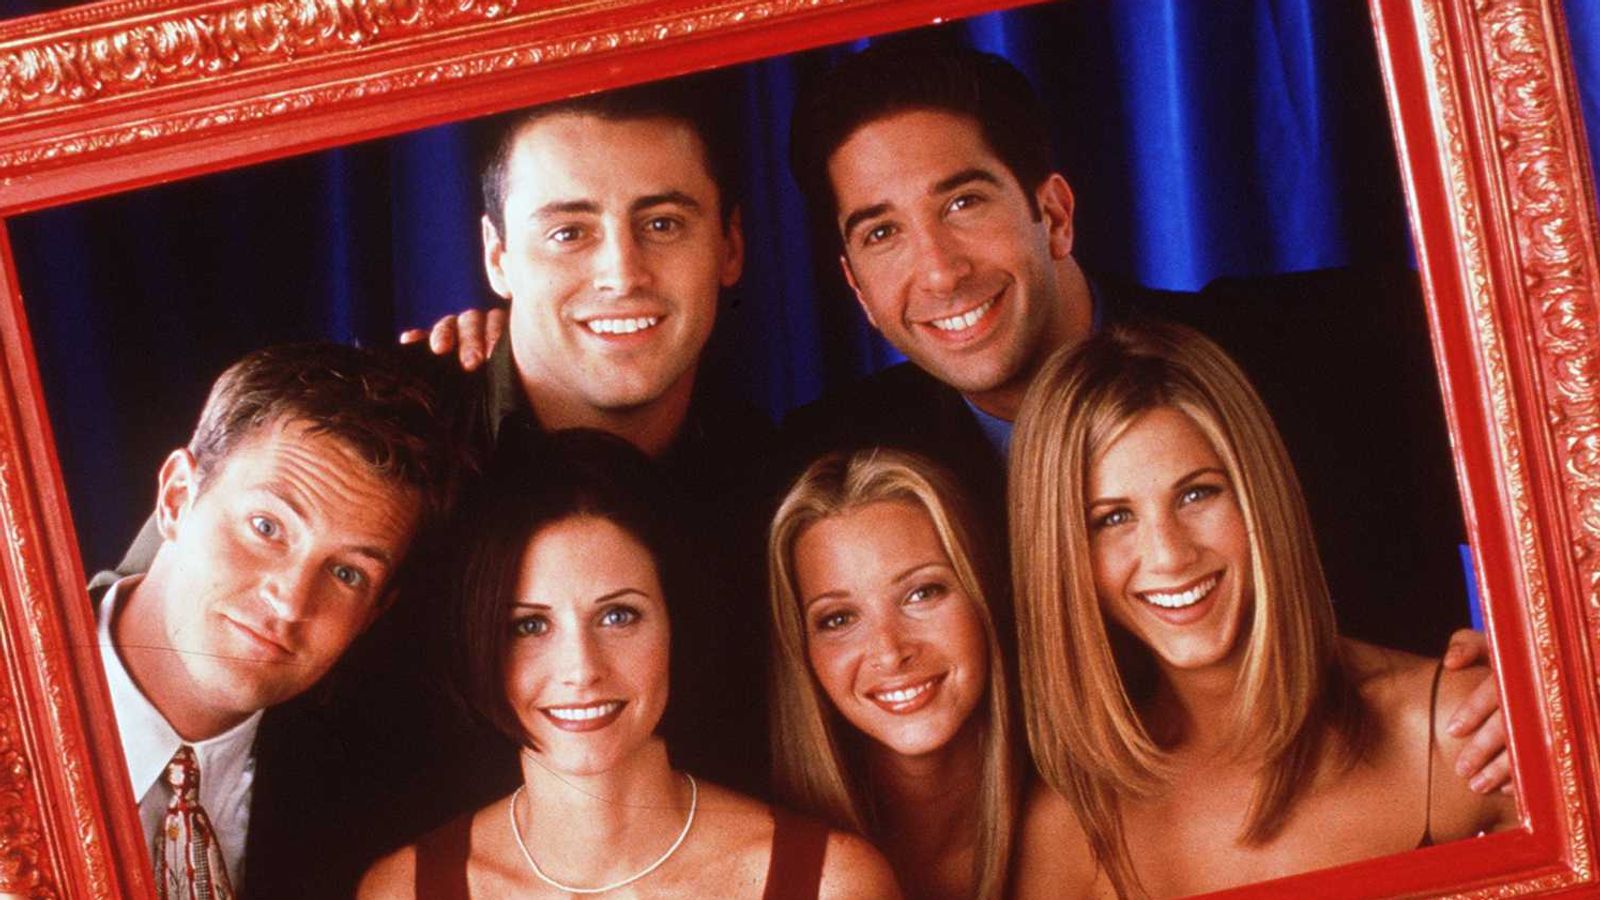 The cast of Friends, clockwise from top left: Matt LeBlanc (Joey), David Schwimmer (Ross), Jennifer Aniston (Rachel), Lisa Kudrow (Phoebe), Courteney Cox (Monica), Matthew Perry (Chandler)